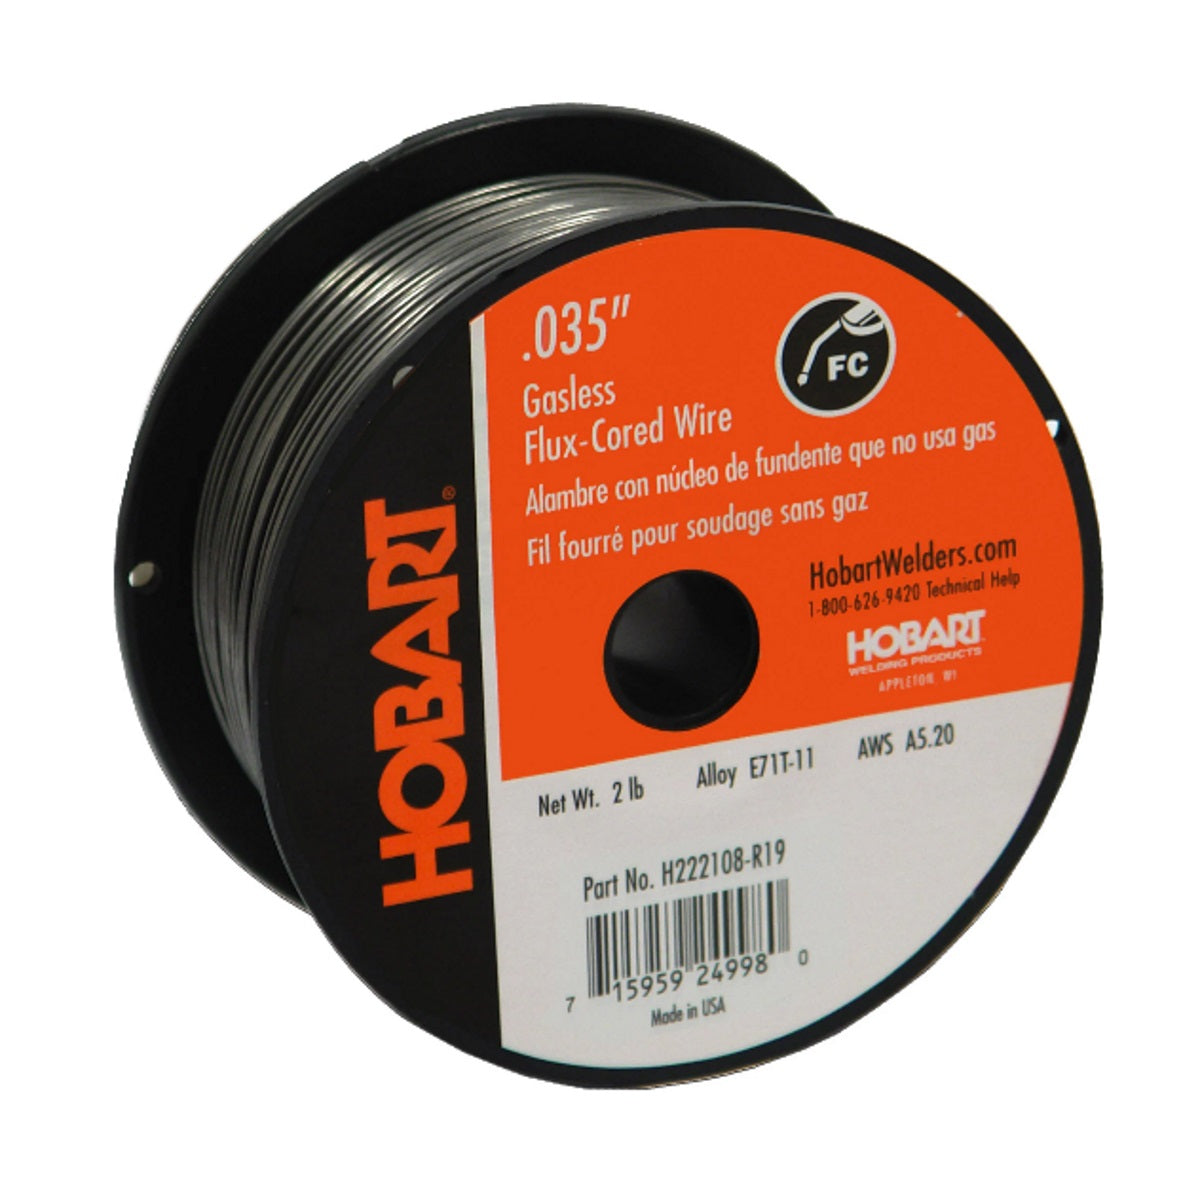 Hobart Fabshield 21B .035 x 2lb Flux Cored Wire (E71TGS035X2)